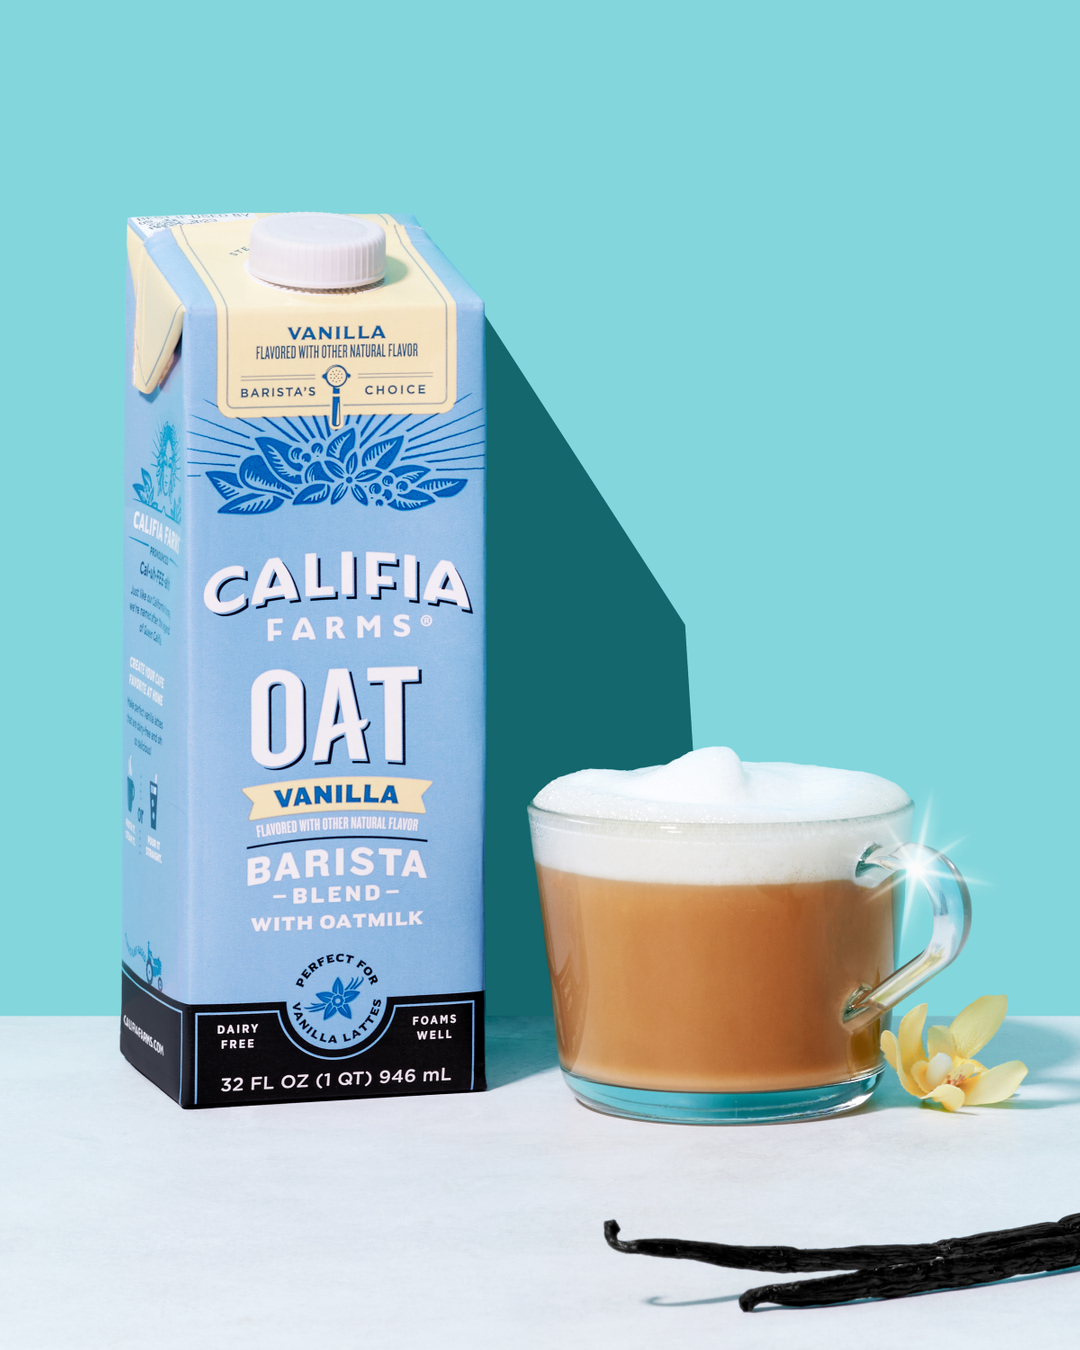 Califia Farms milk in cup with carton